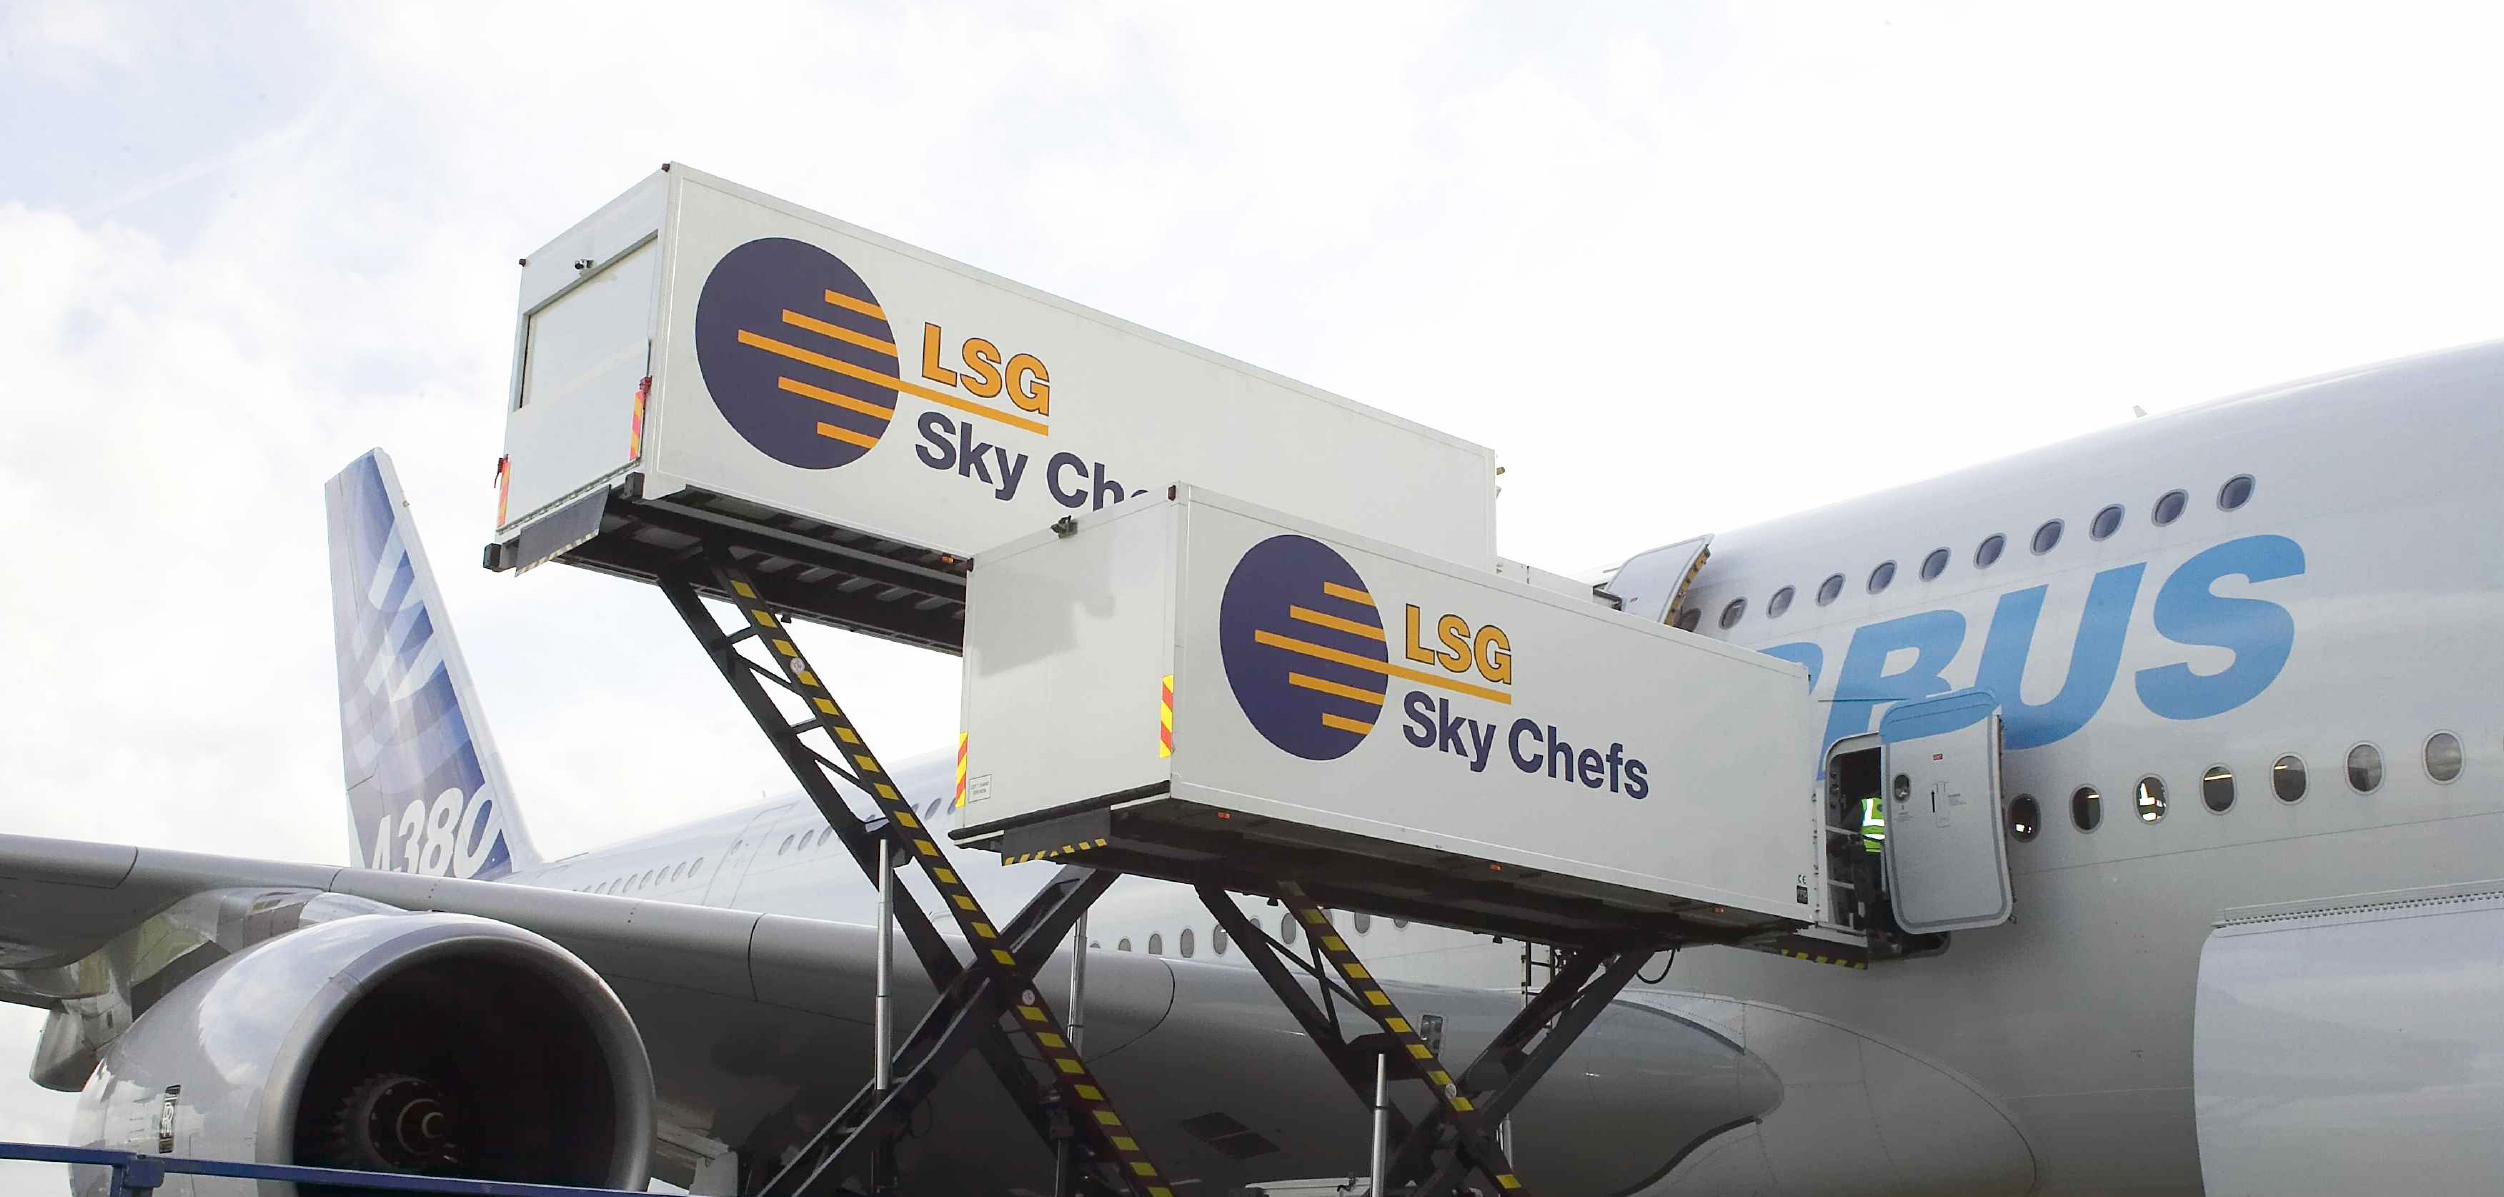 LSG_Sky_Chefs_A380_highloader_in_LHR_960x459.jpg